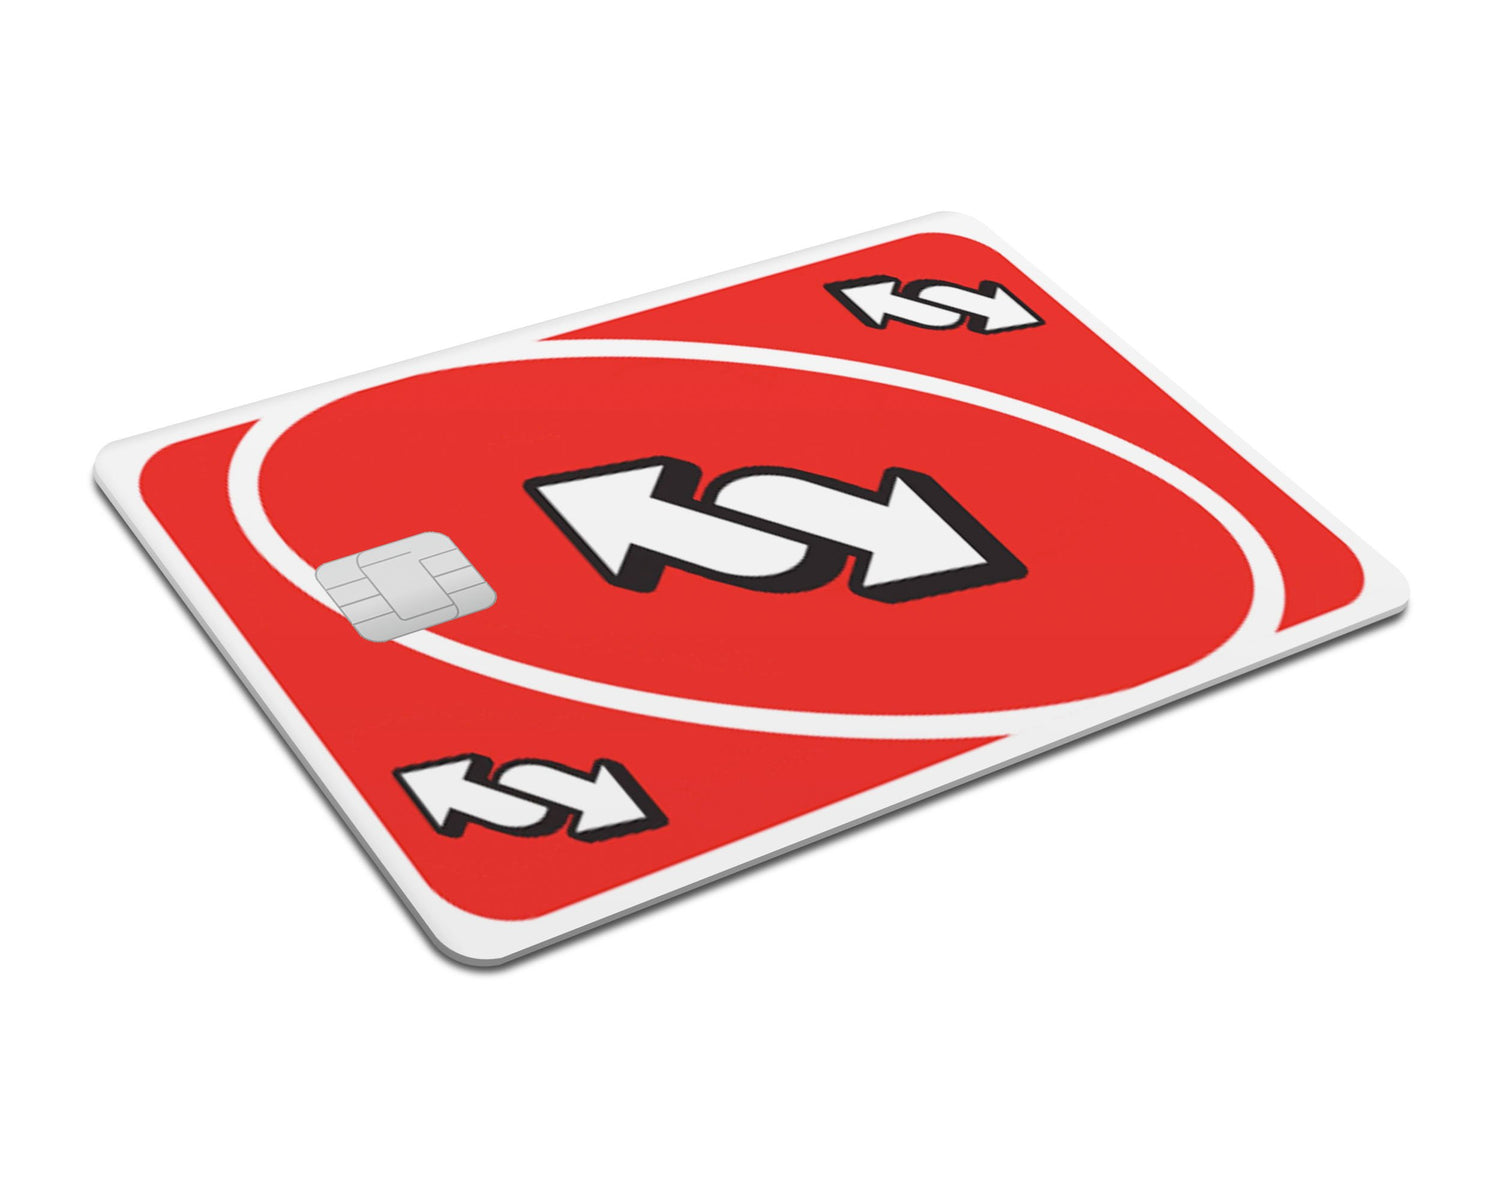 Uno Reverse Draw 4 Card Credit Card SMART Sticker Skin Decal, Card